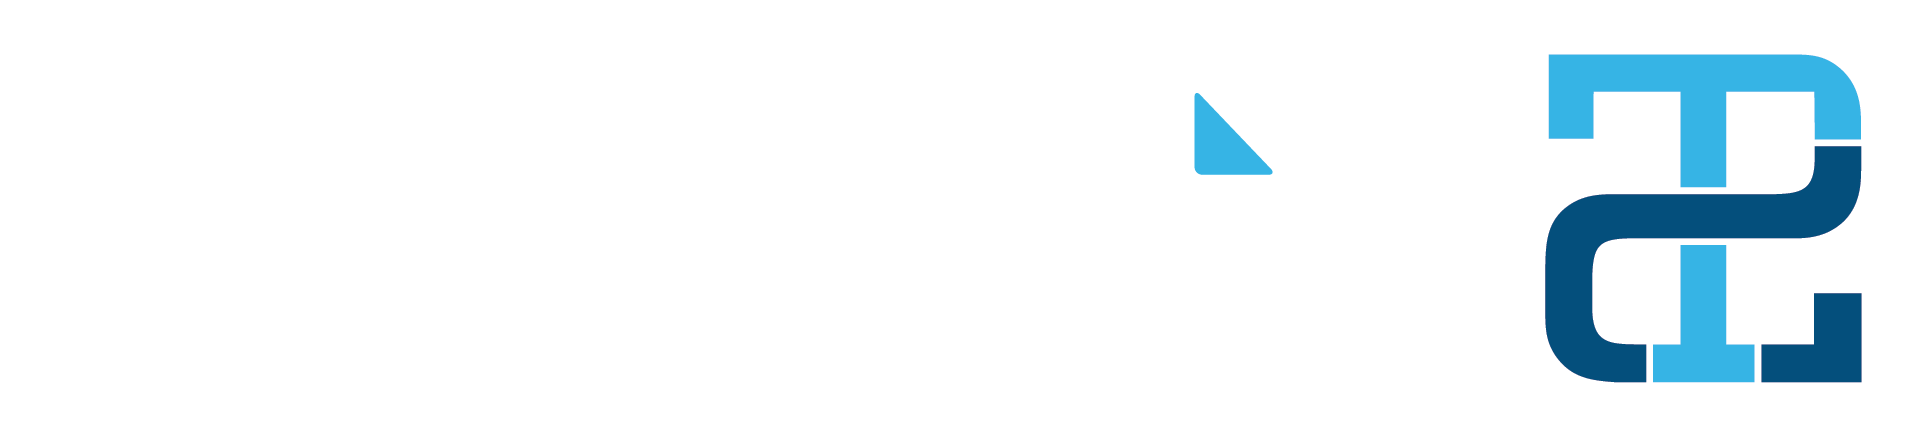 Southeast Technical 大学 logo and monogram